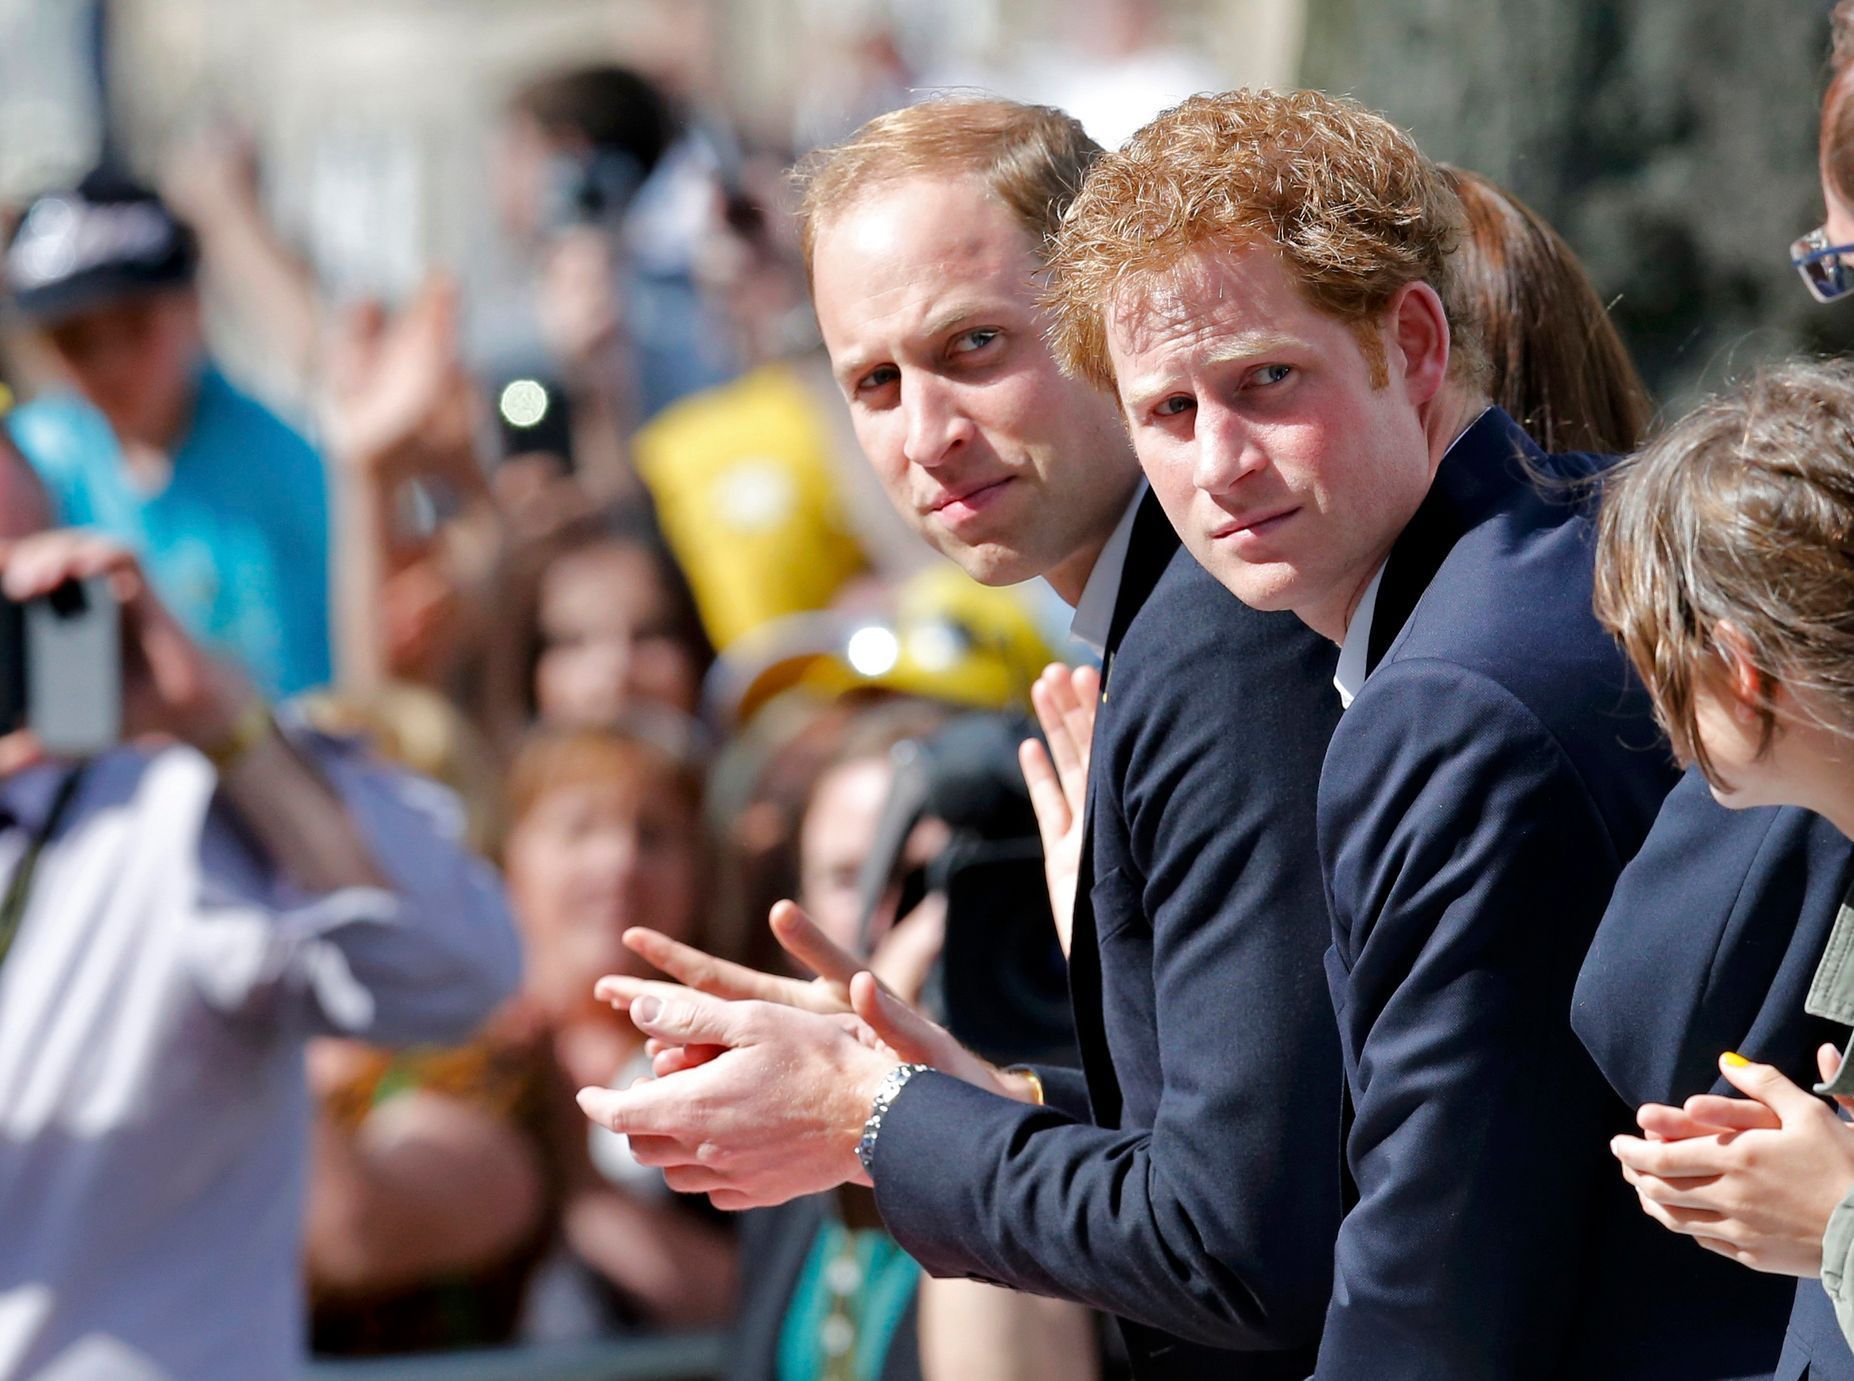 Princové Harry a William na první etapě Tour de France 2014